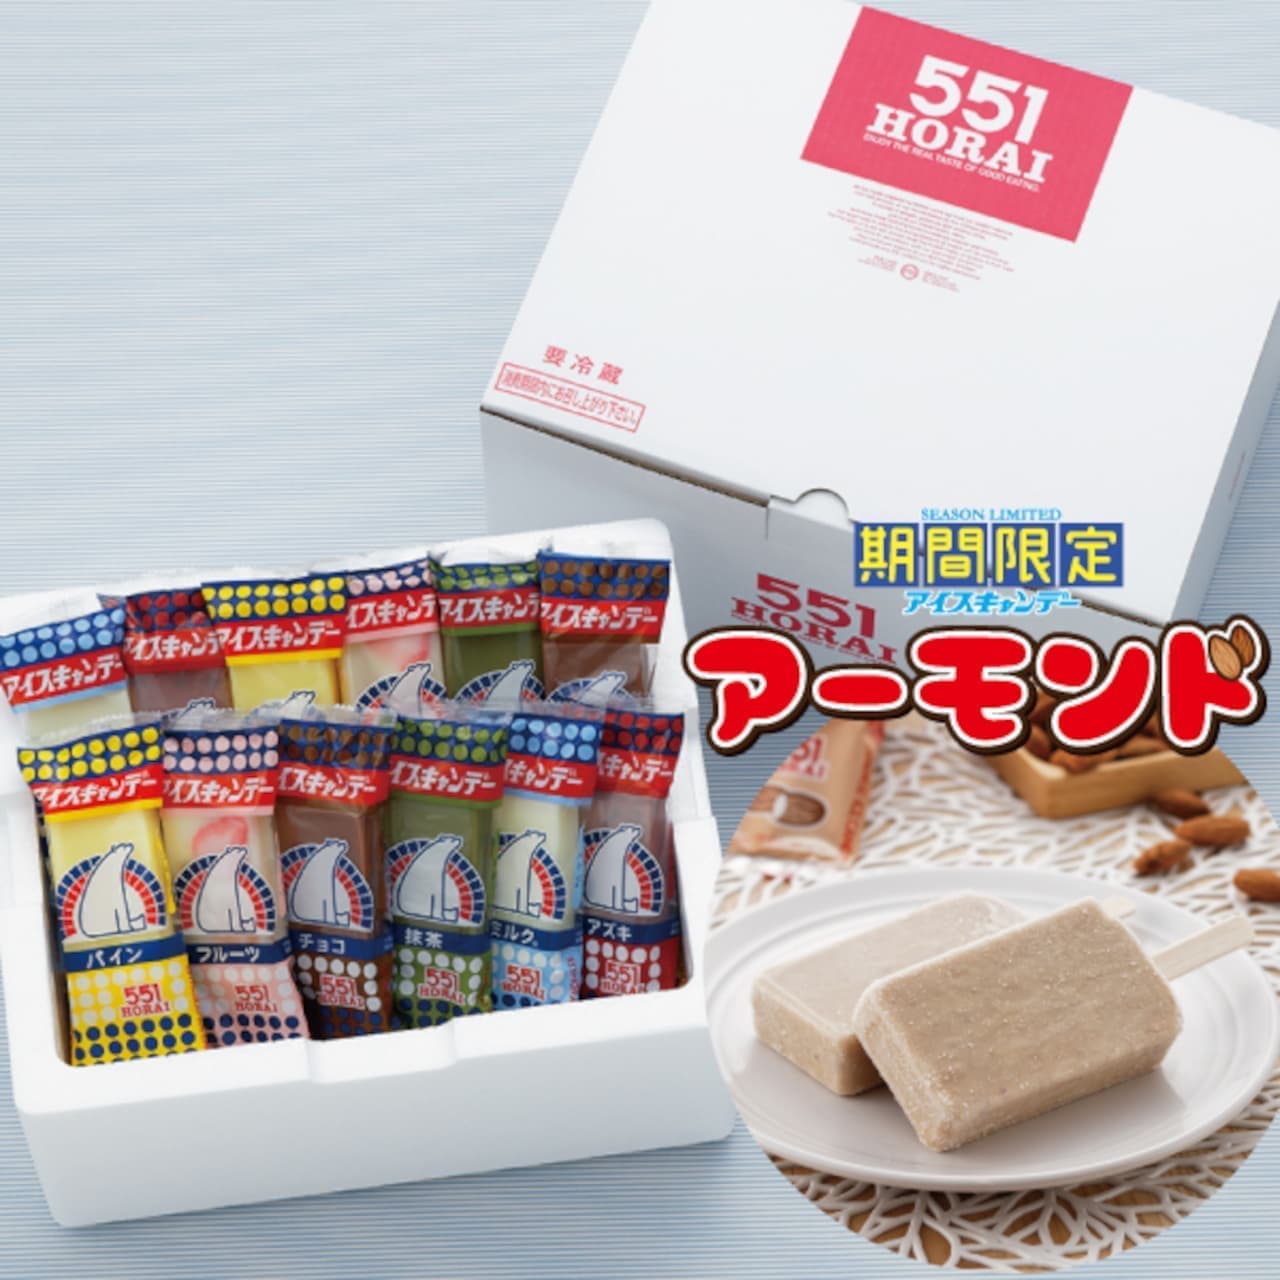 551 HORAI "Almond Candy